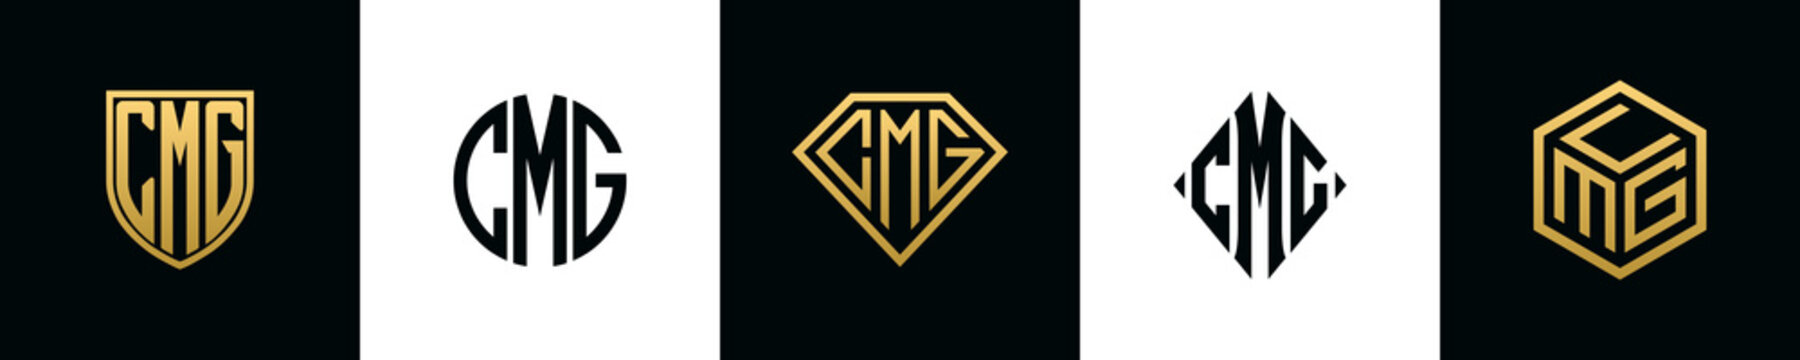 Initial letters CMG logo designs Bundle